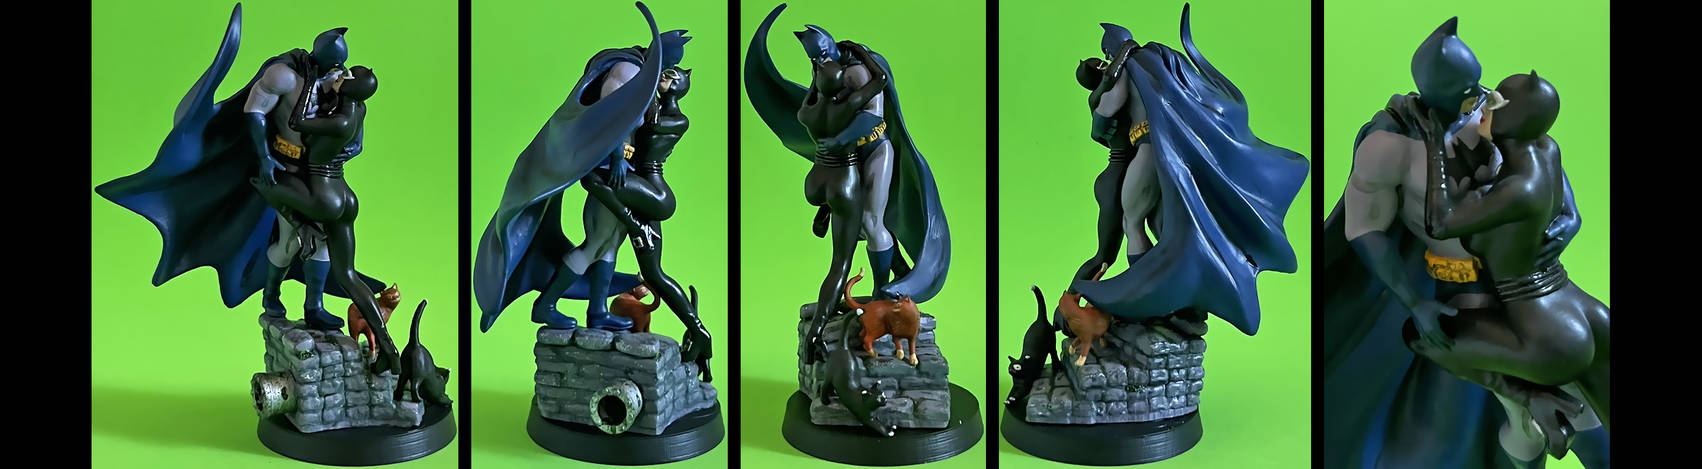 Batman and Catwoman custom figurine